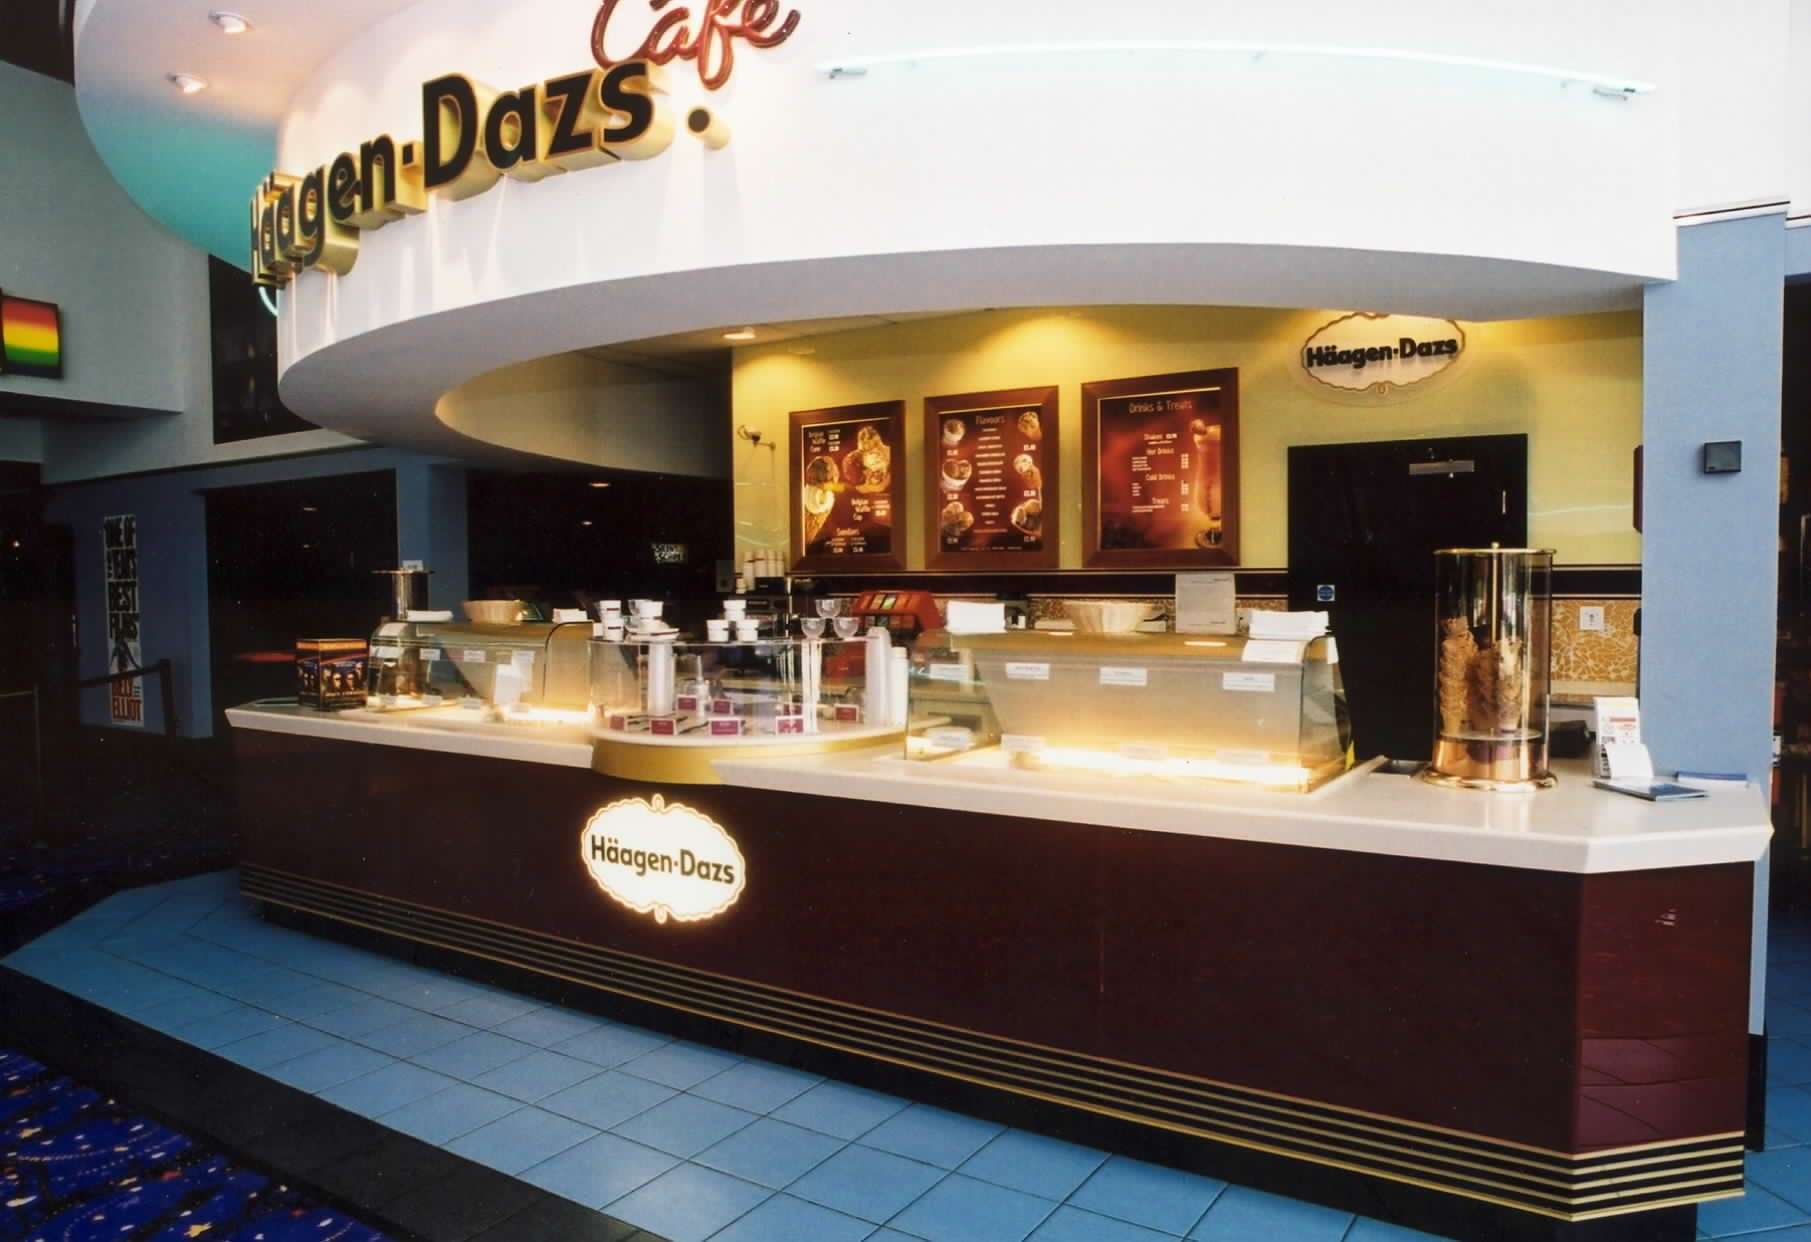 American ice cream brand Häagen-Dazs was previously on sale in the foyer